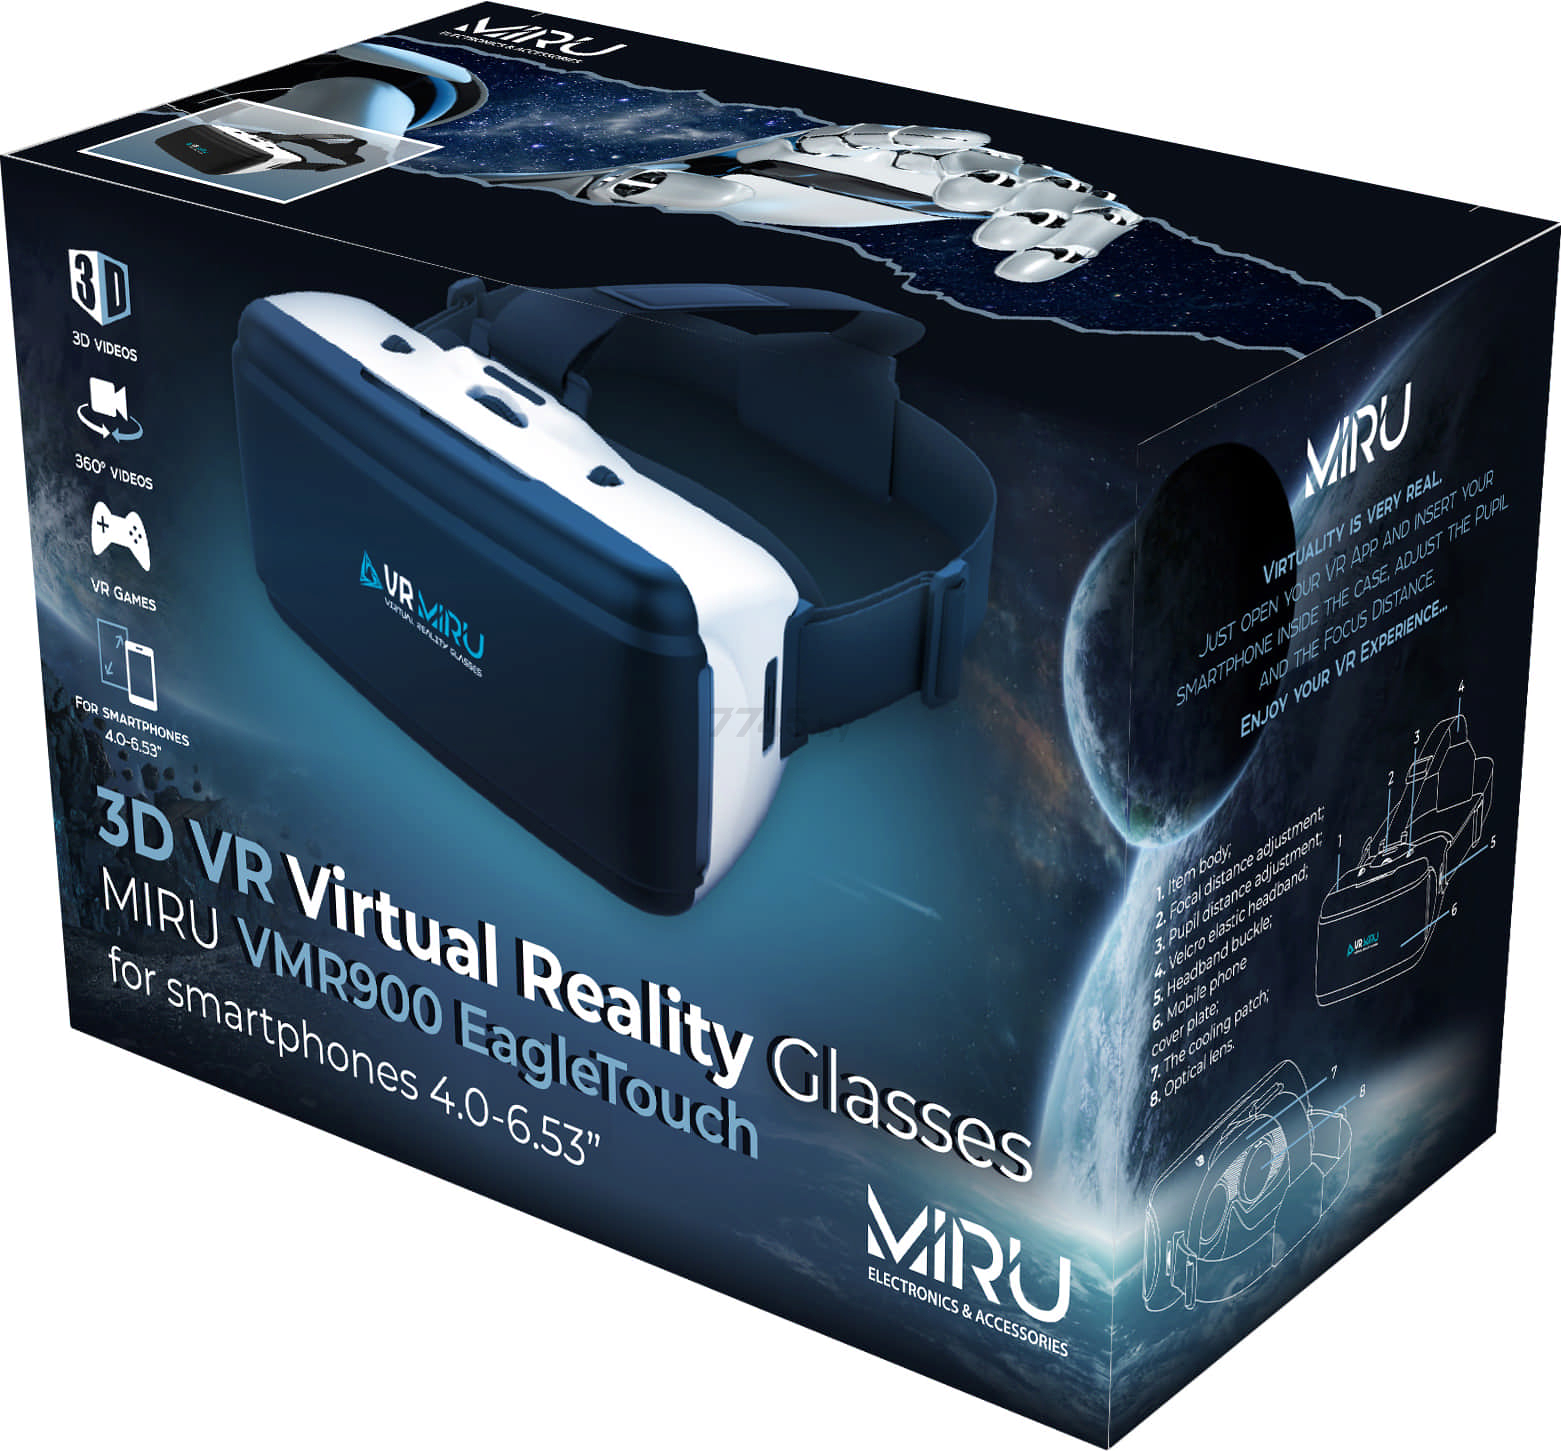 Oчки виртуальной реальности MIRU VMR900 Eagle Touch - Фото 12